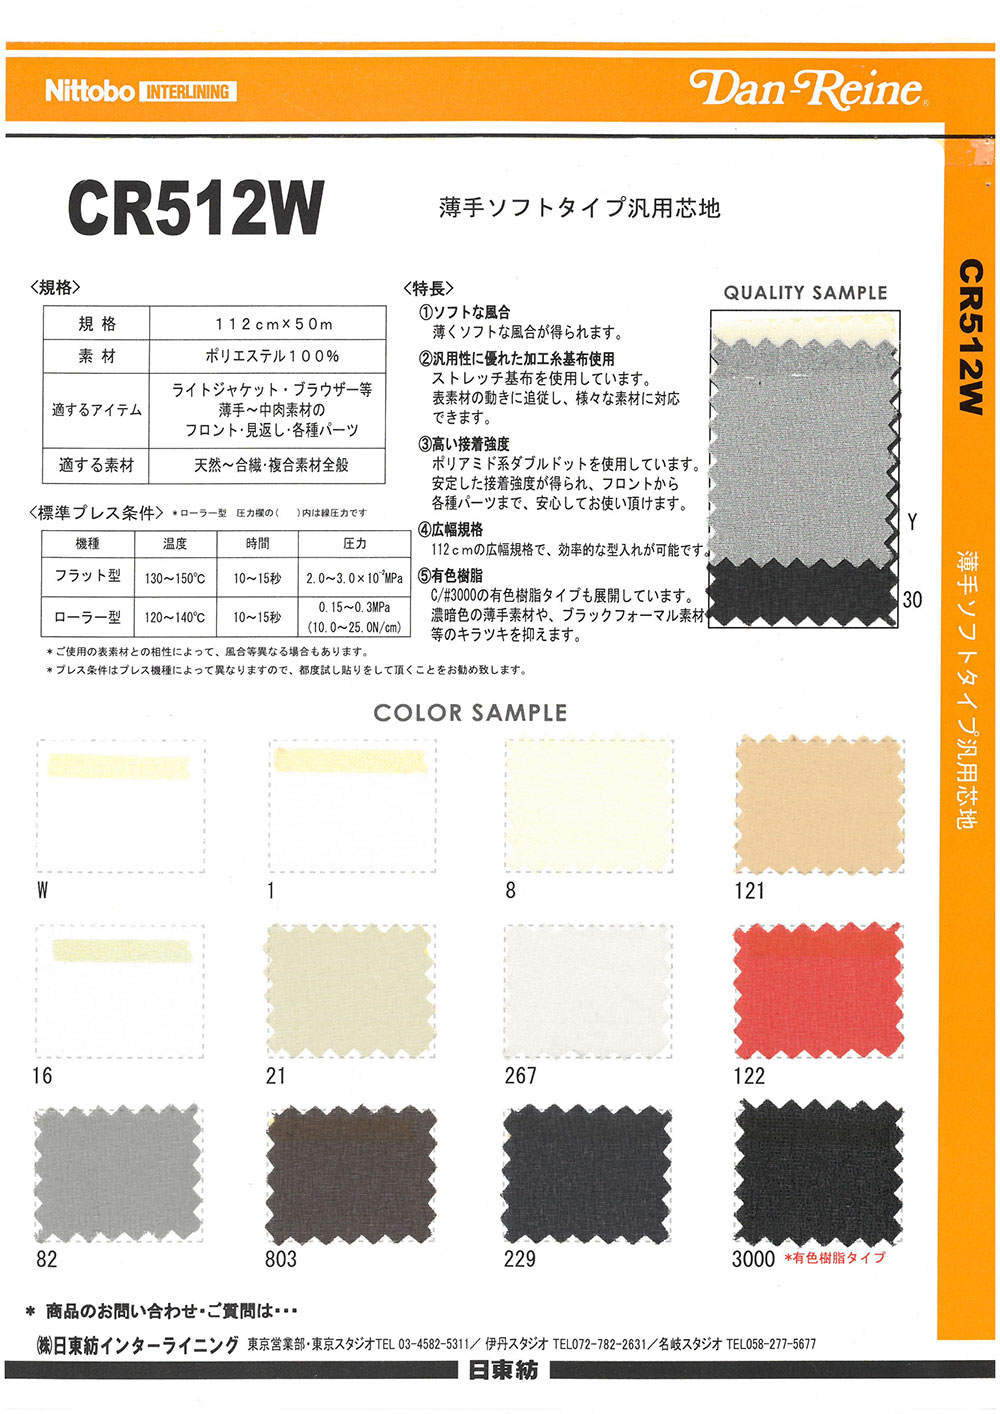 CR512W Thin Soft Type General-purpose Interlining Nittobo